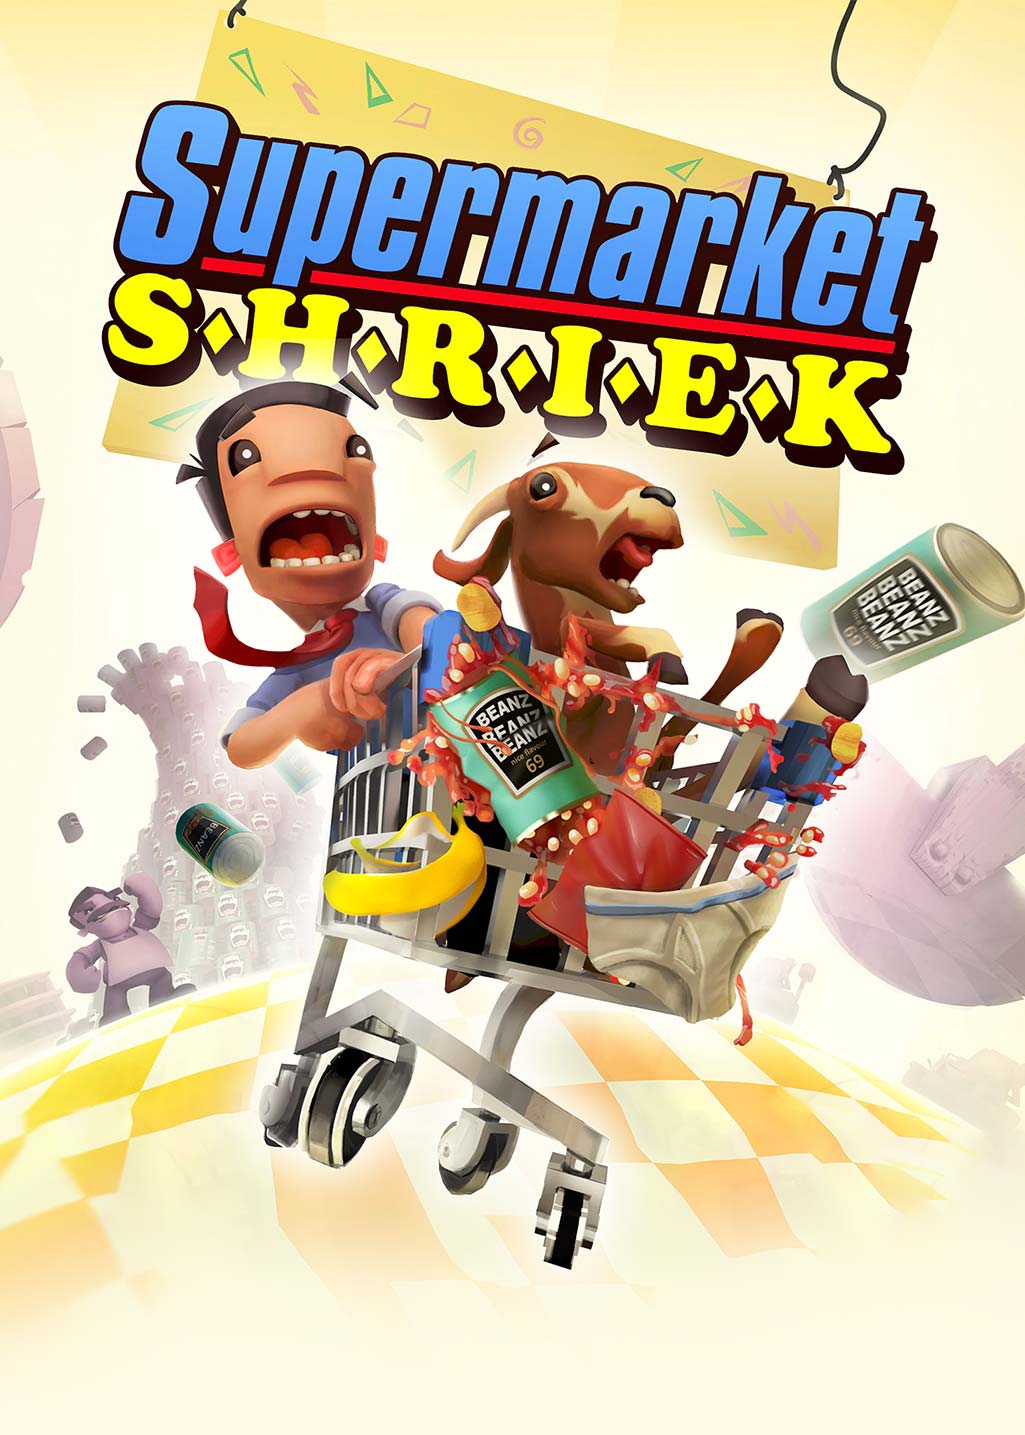 Super Market Shriek